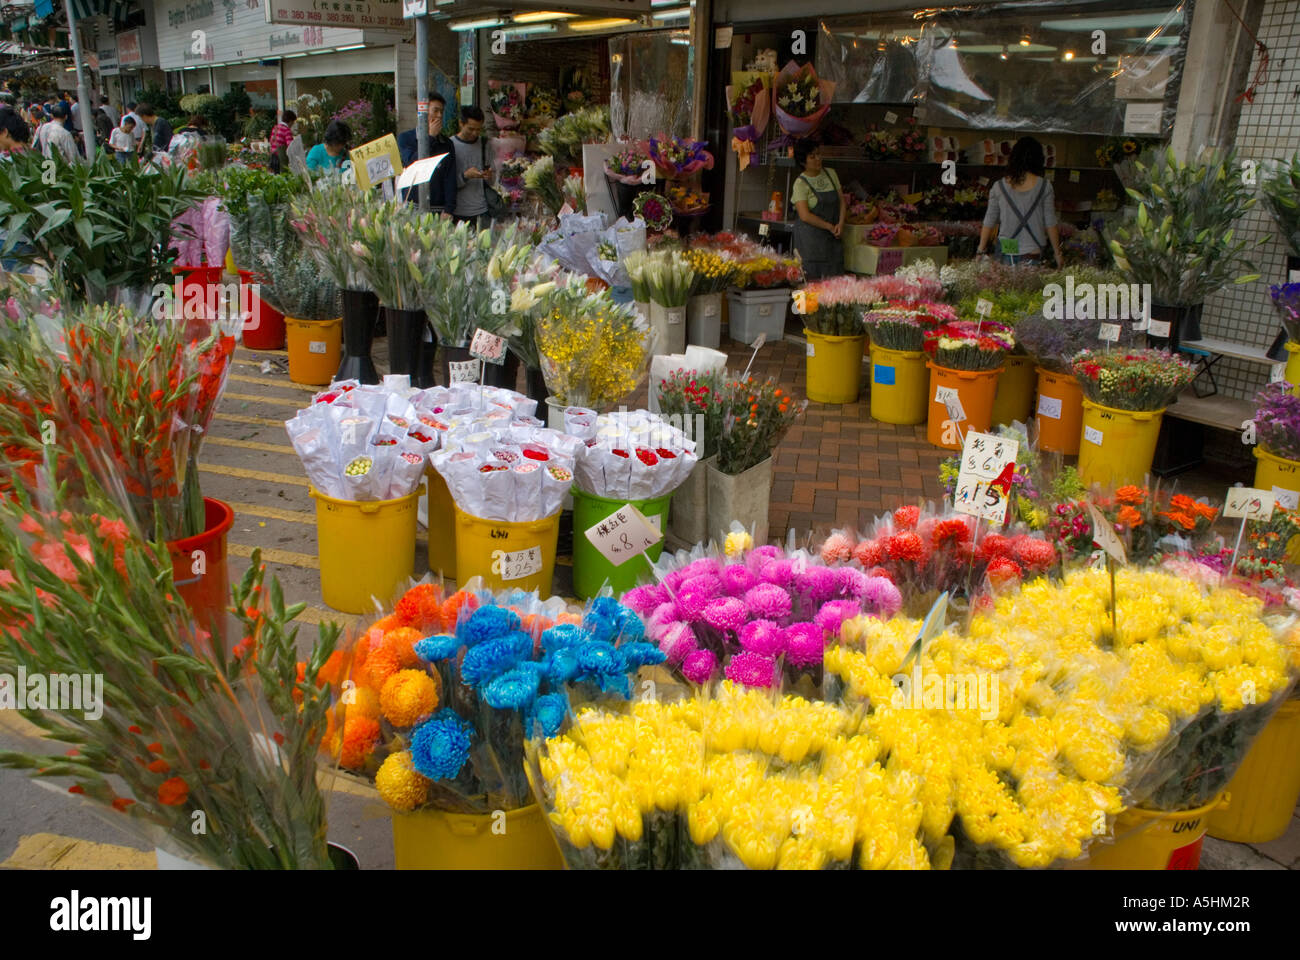 Asie Chine Hong Kong Kowloon Mongkok marché aux fleurs Banque D'Images